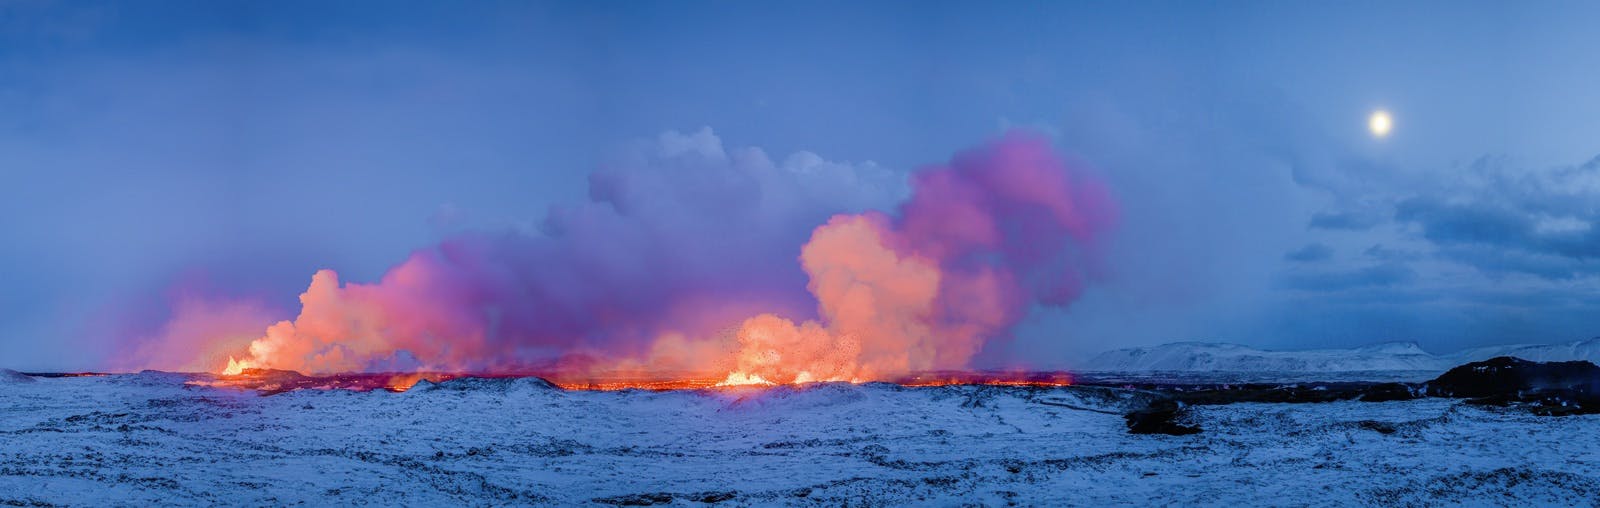 Sundhnukagigarod eruption in Reykjanes